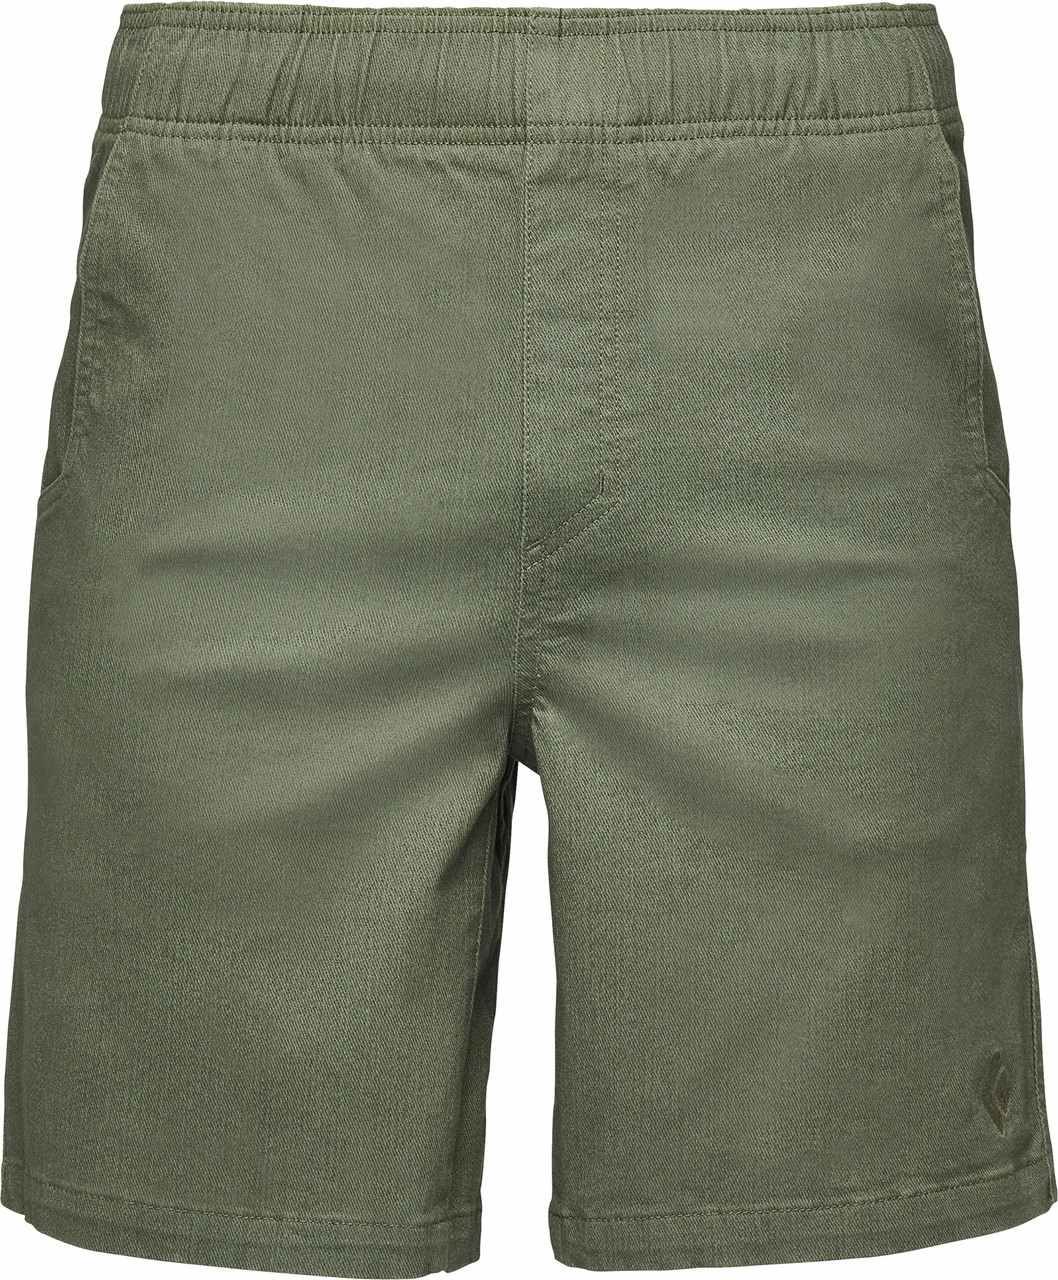 Dirtbag Shorts Tundra